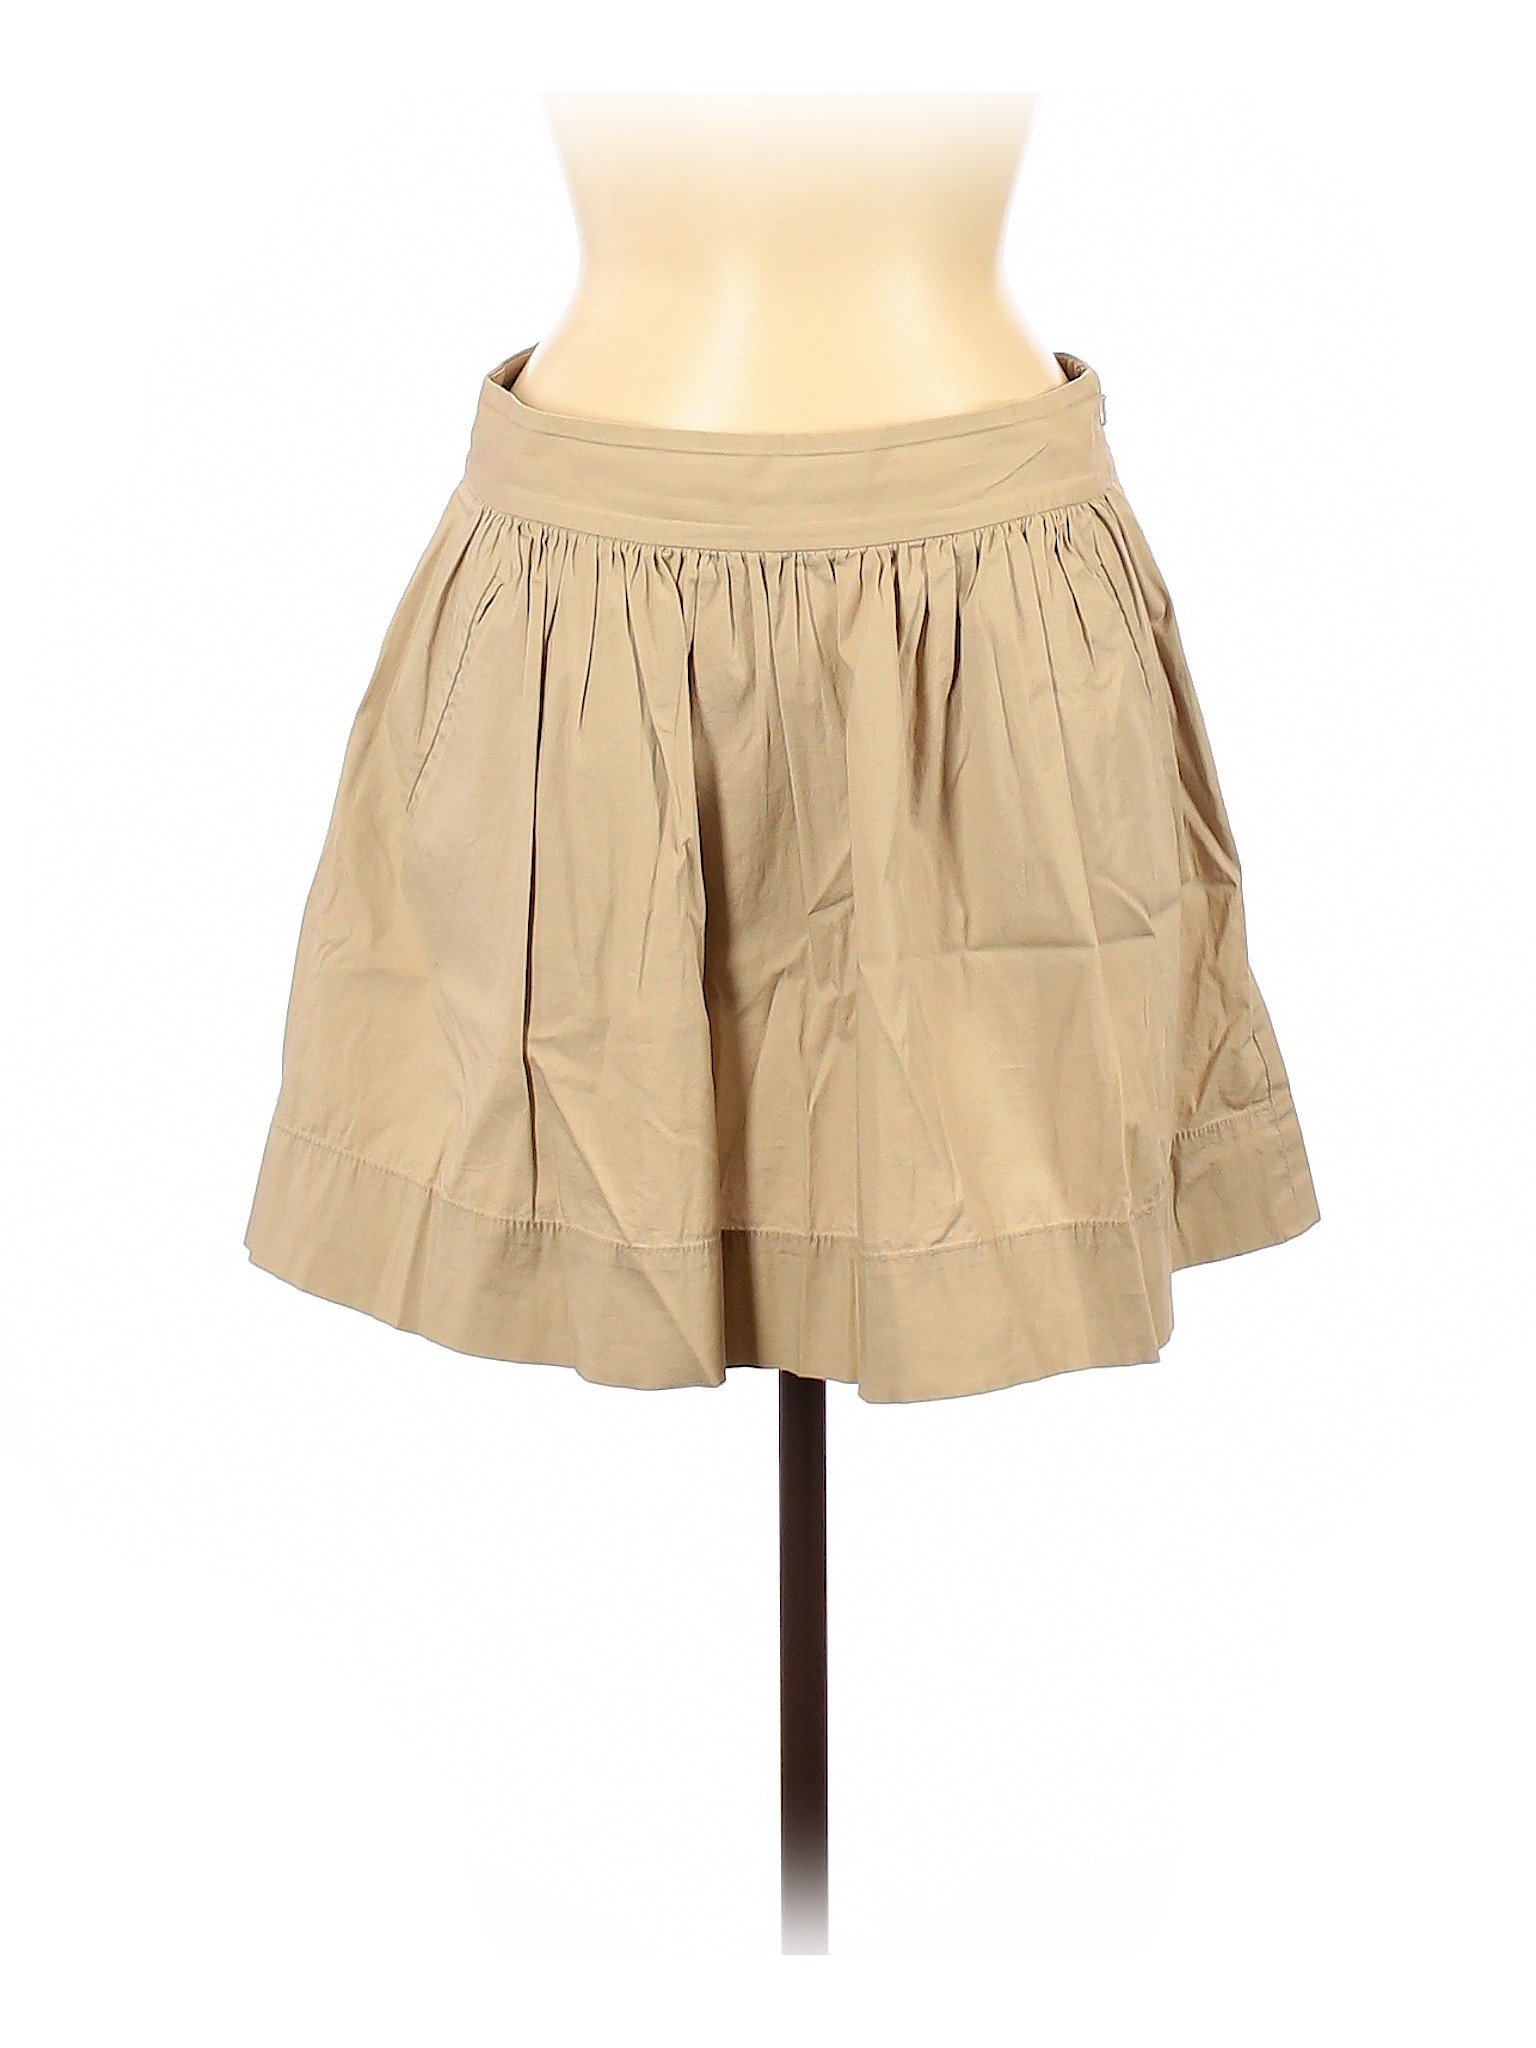 Banana Republic Women Brown Denim Skirt 6 Petites | eBay